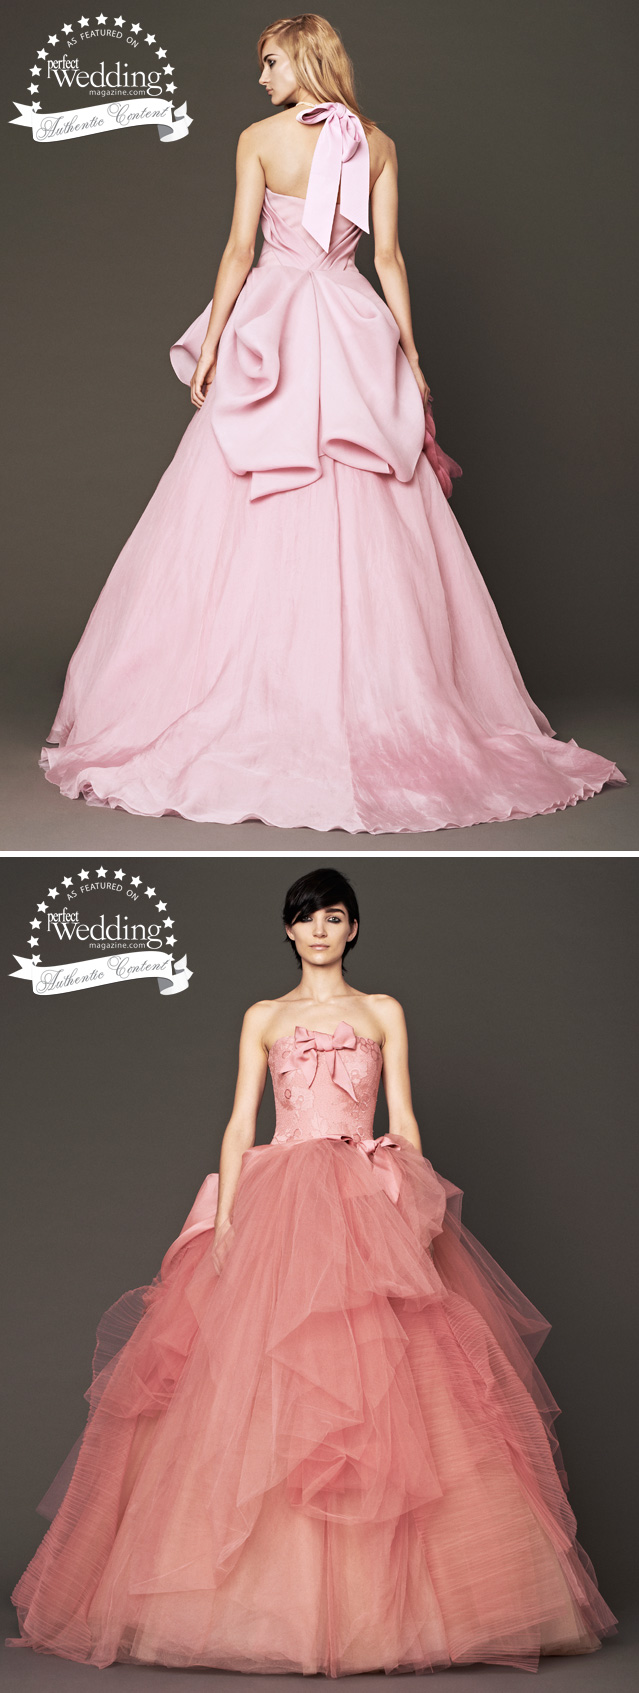 Vera Wang, Fall 2014 Bridal, New York Bridal Week, Perfect Wedding magazine, Fashion, Pink gowns